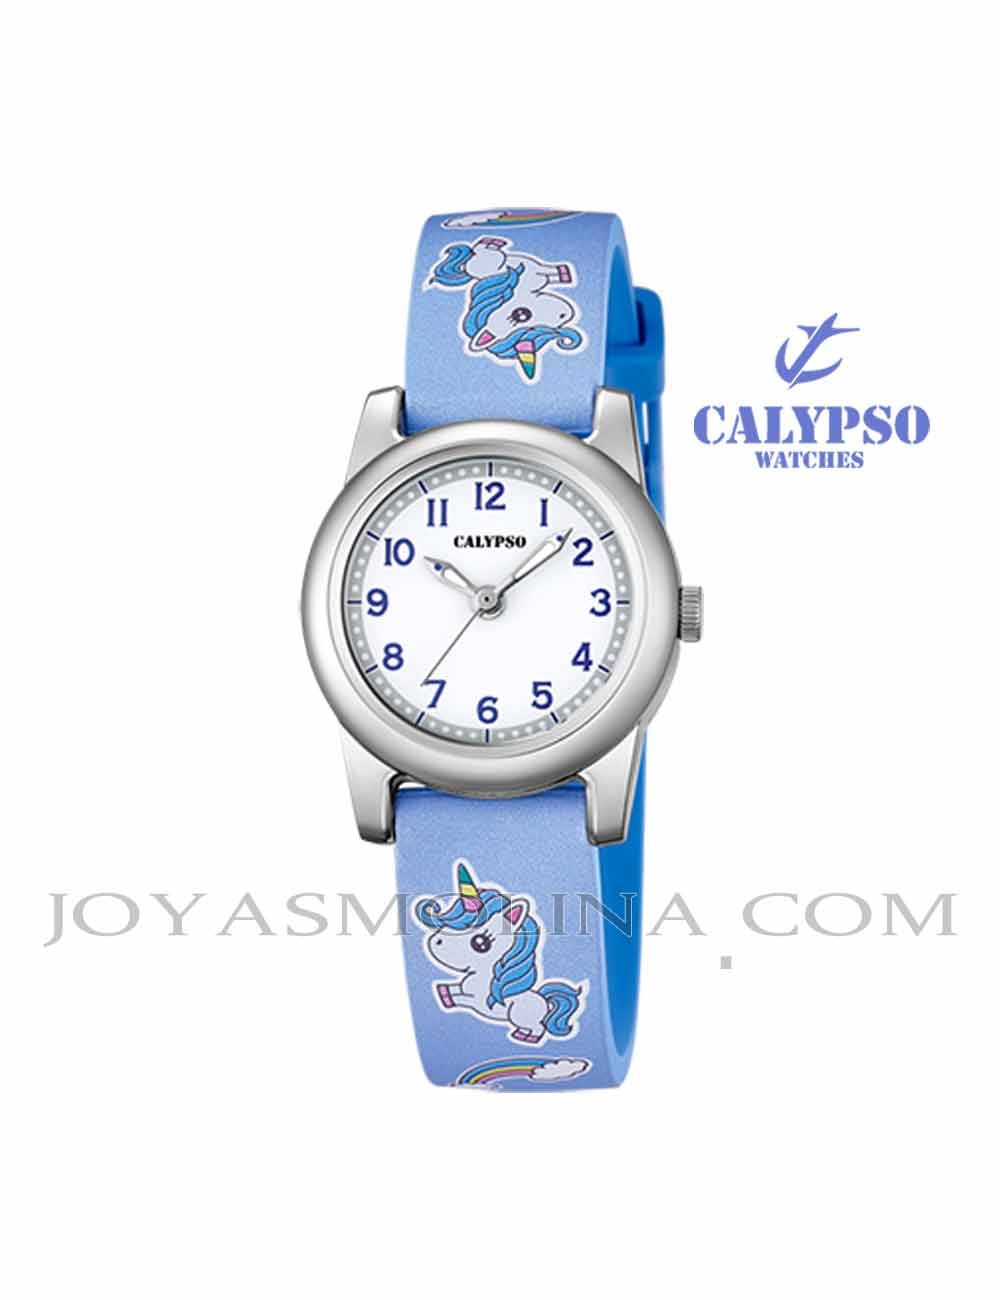 Reloj Calypso niña unicornio azul